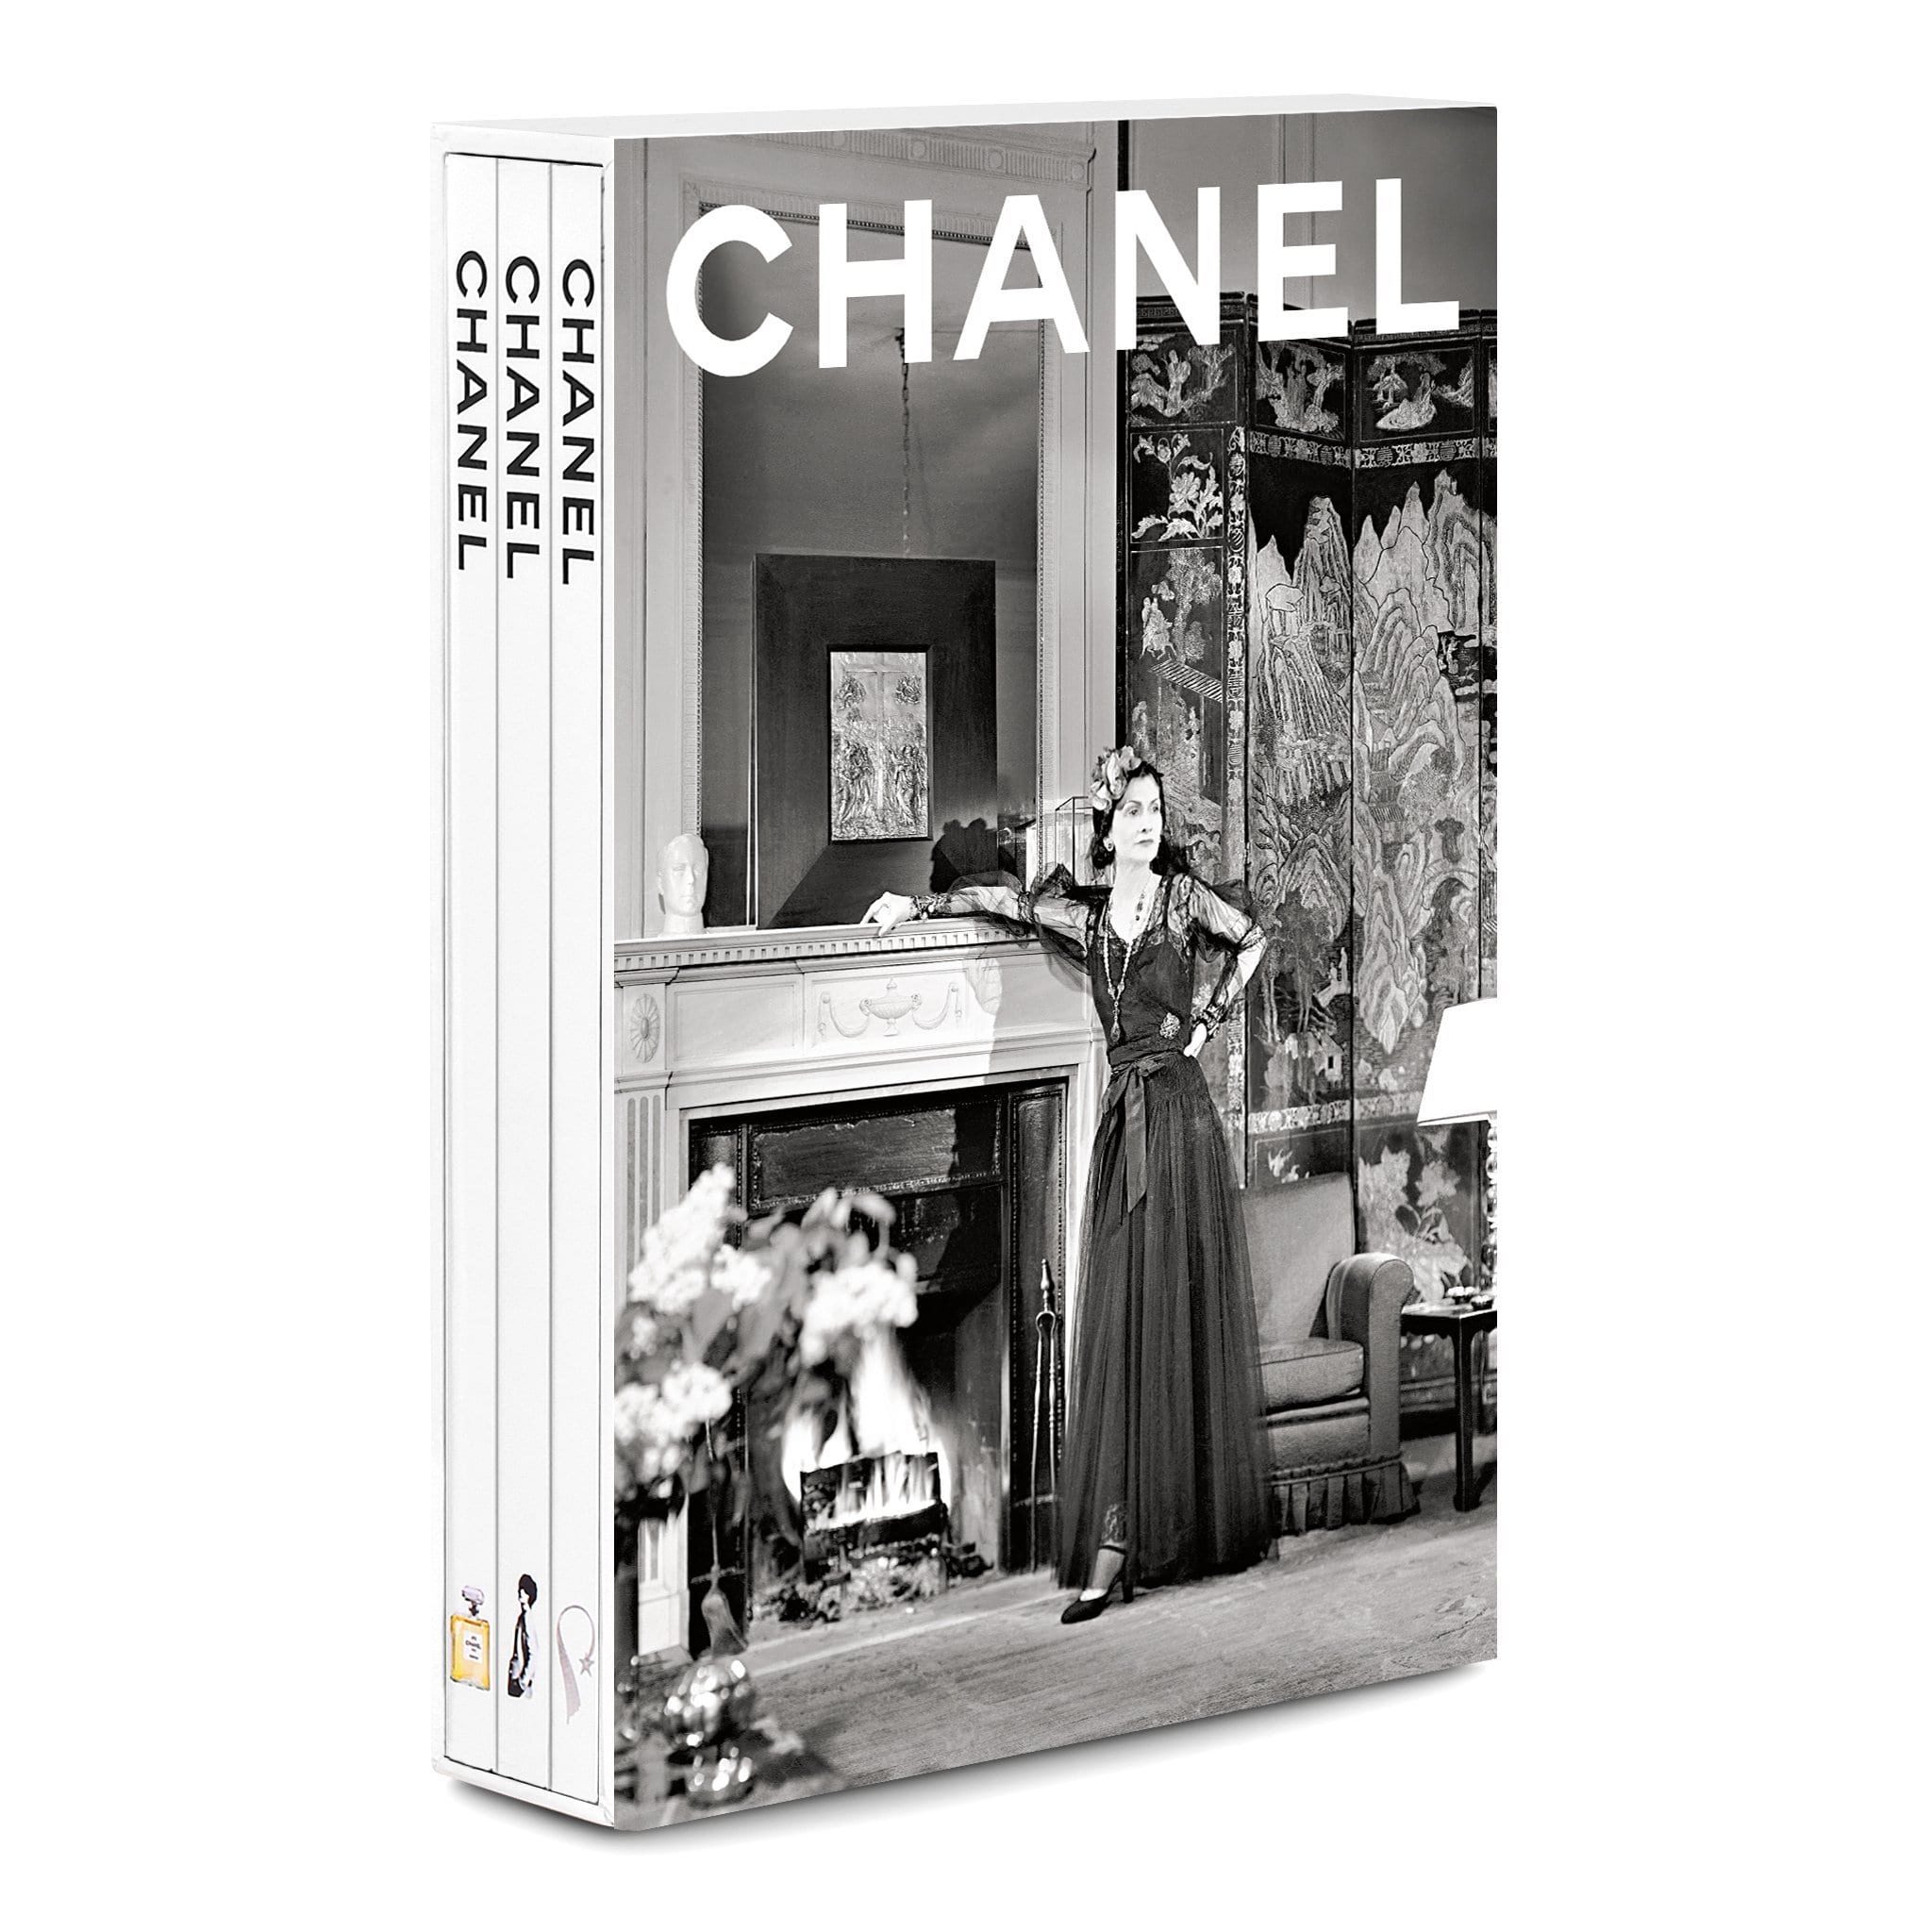 Assouline Chanel 3图书馆